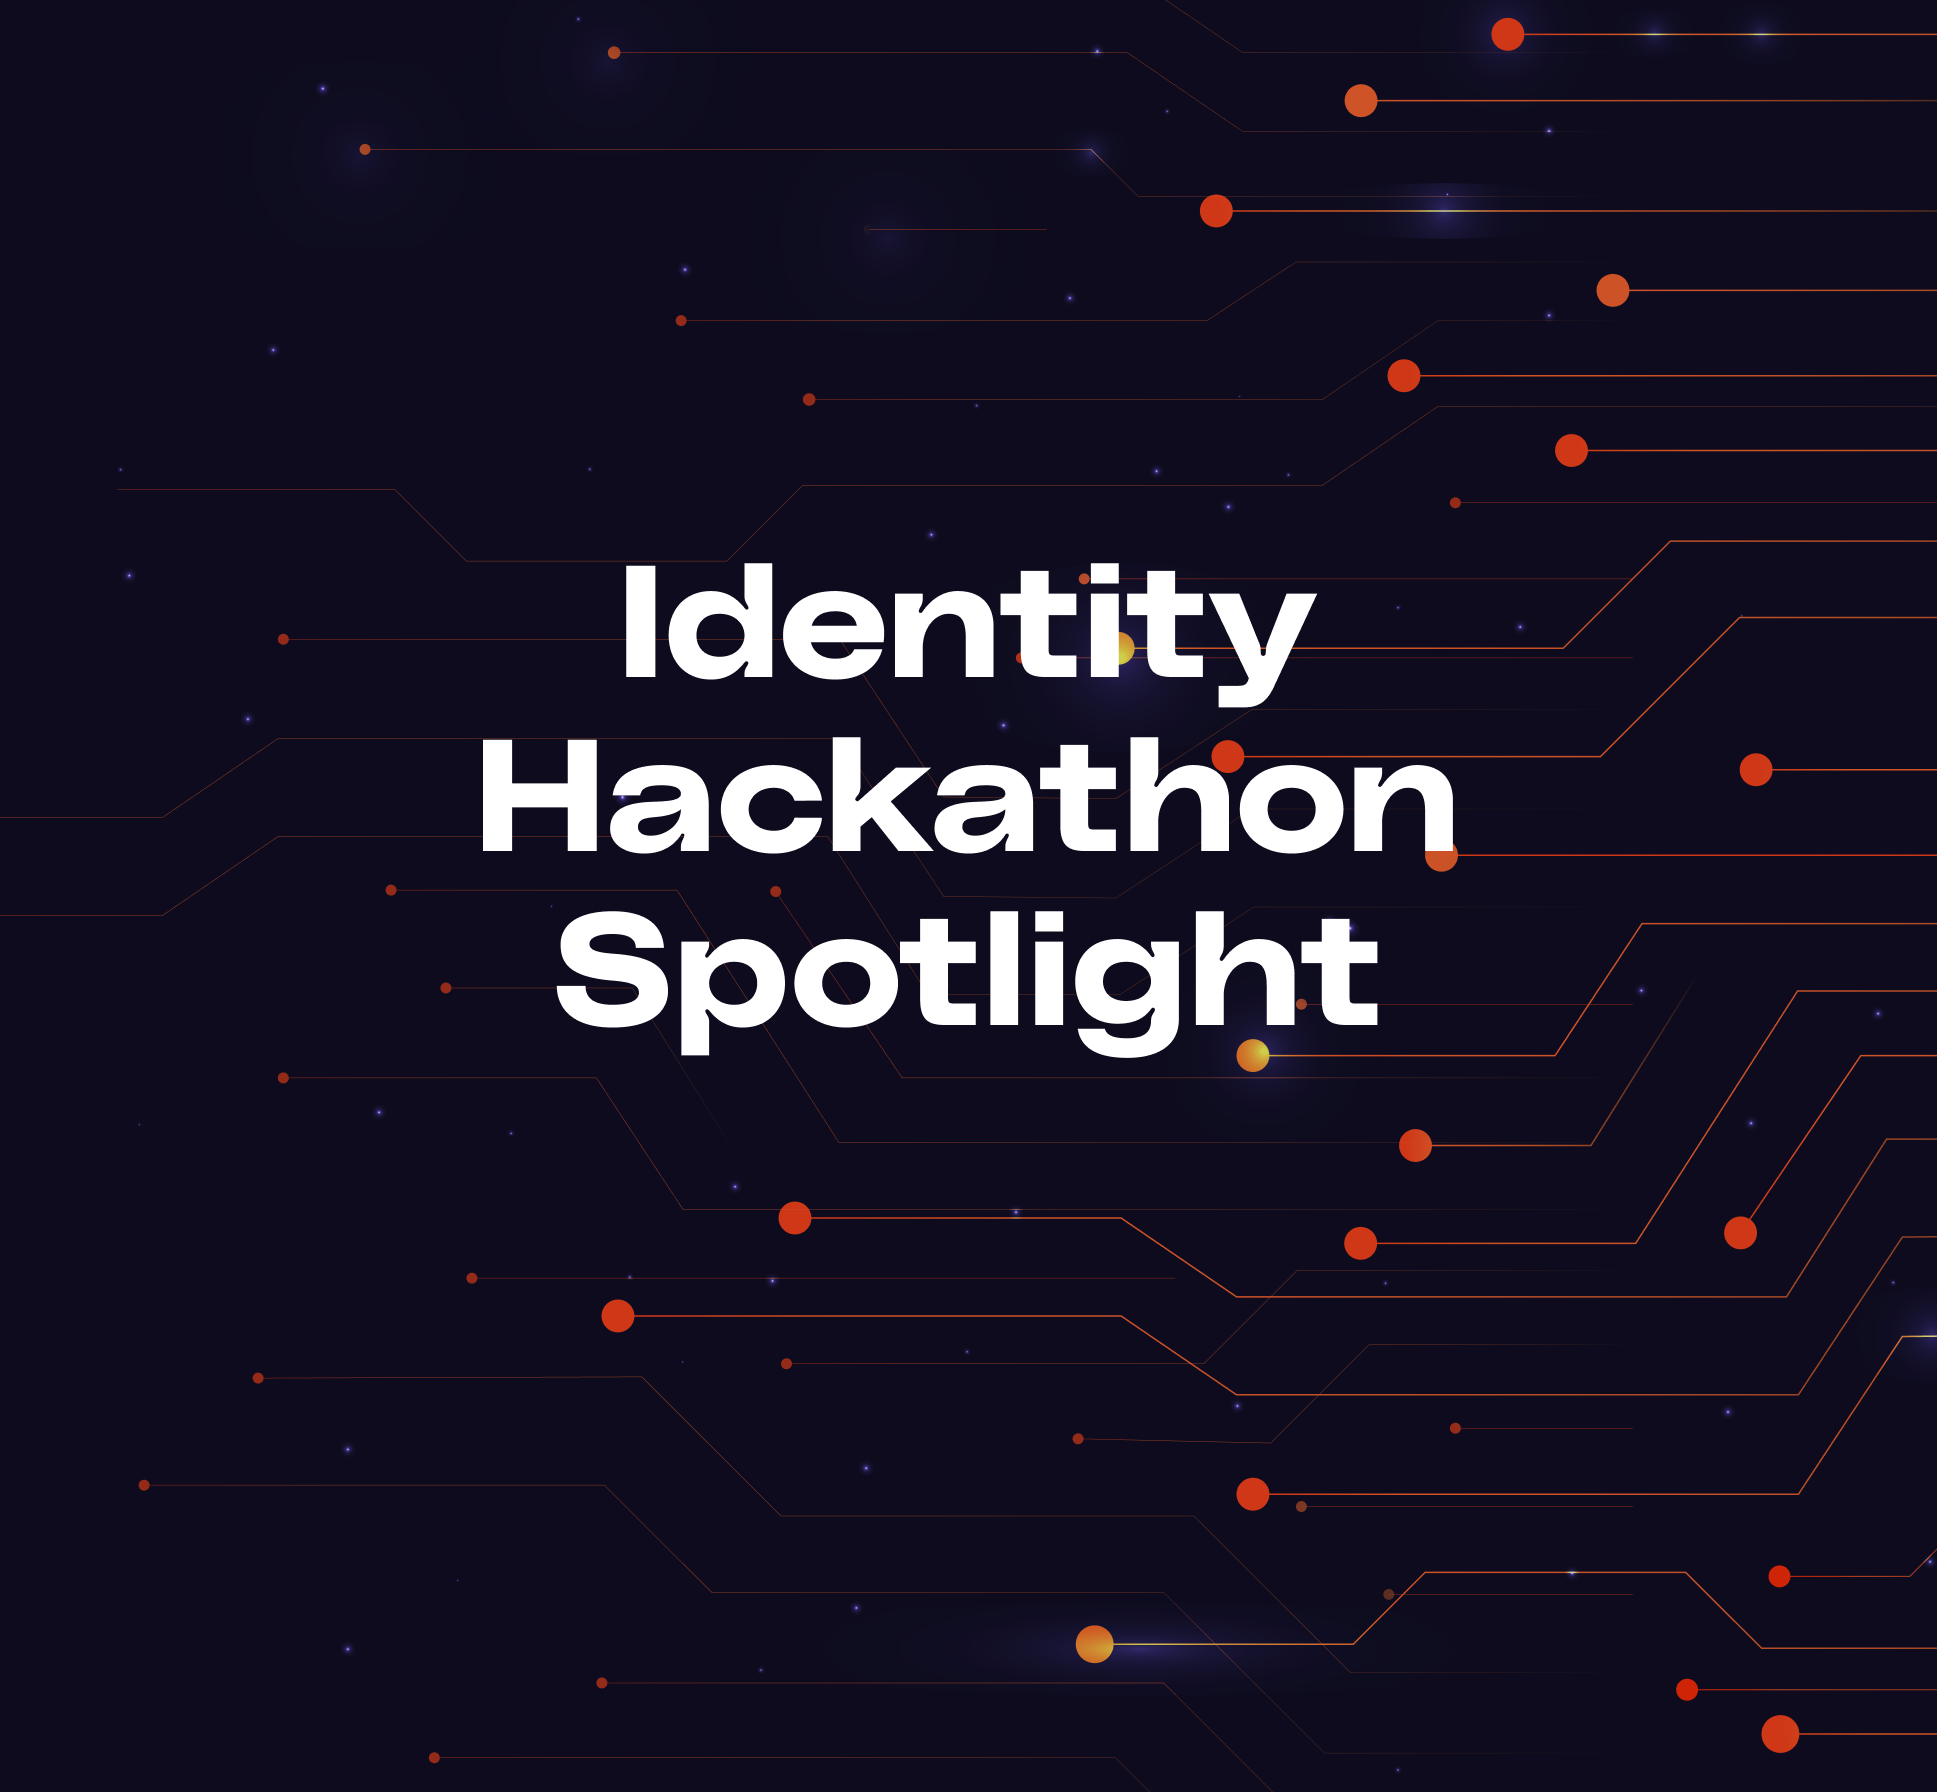 Digital Identity: IdentityHackathon Projects